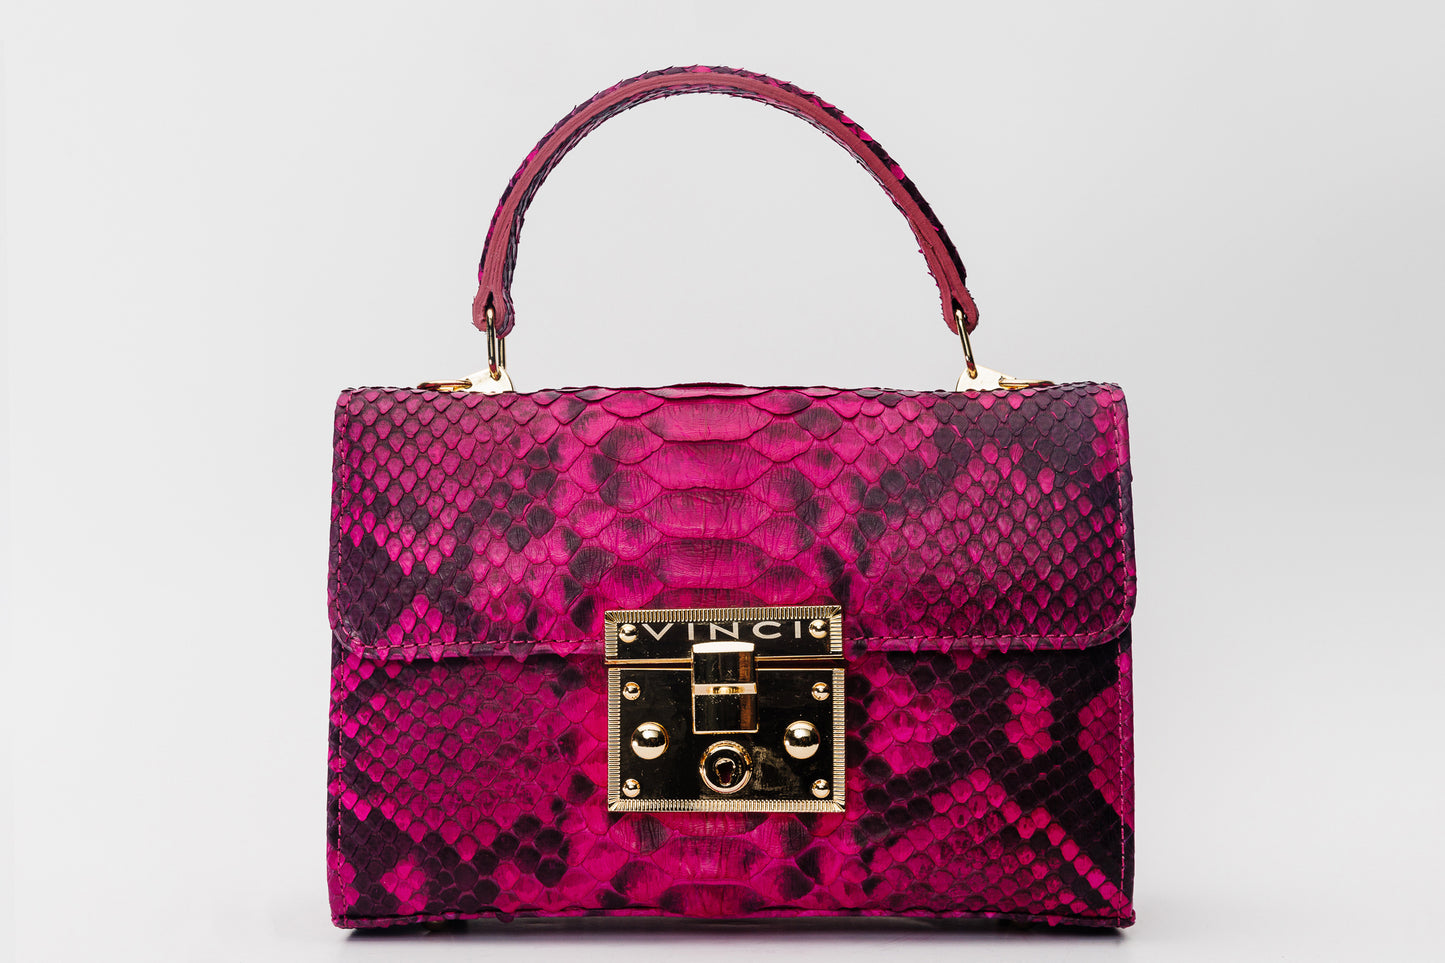 The Queen Fuchsia Leather Handbag